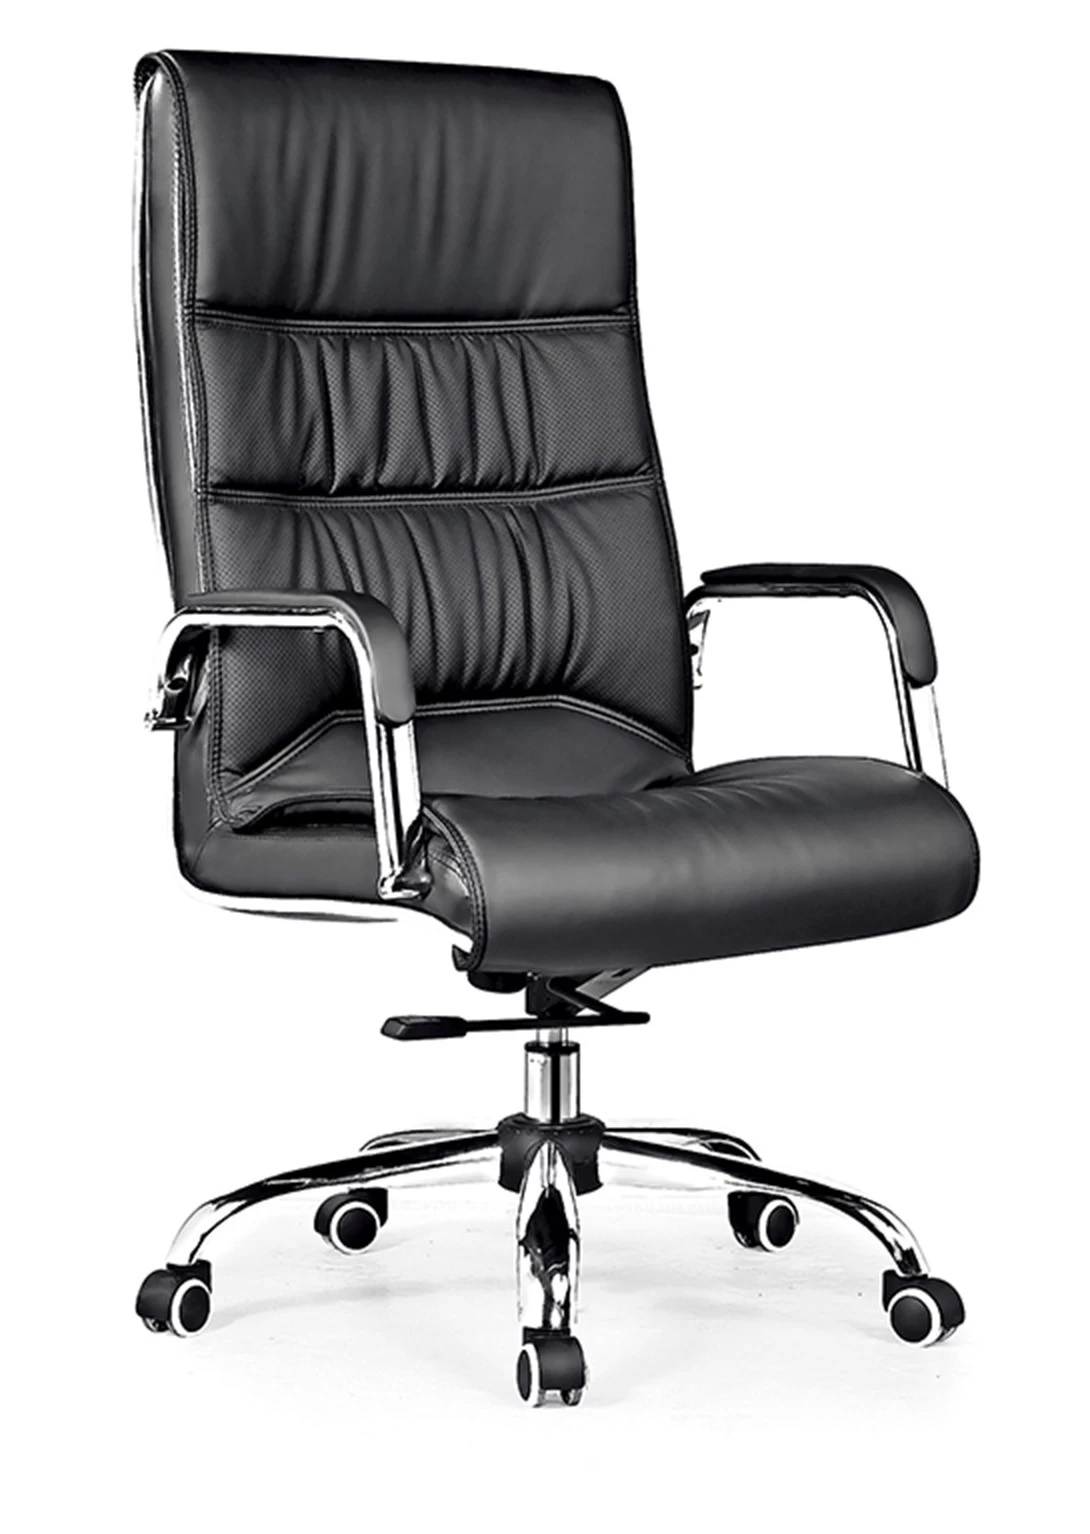 Newcity 636C PU皮革办公椅高品质访客办公椅现代电脑办公椅职员椅高密度海棉5年质保供应商佛山中国